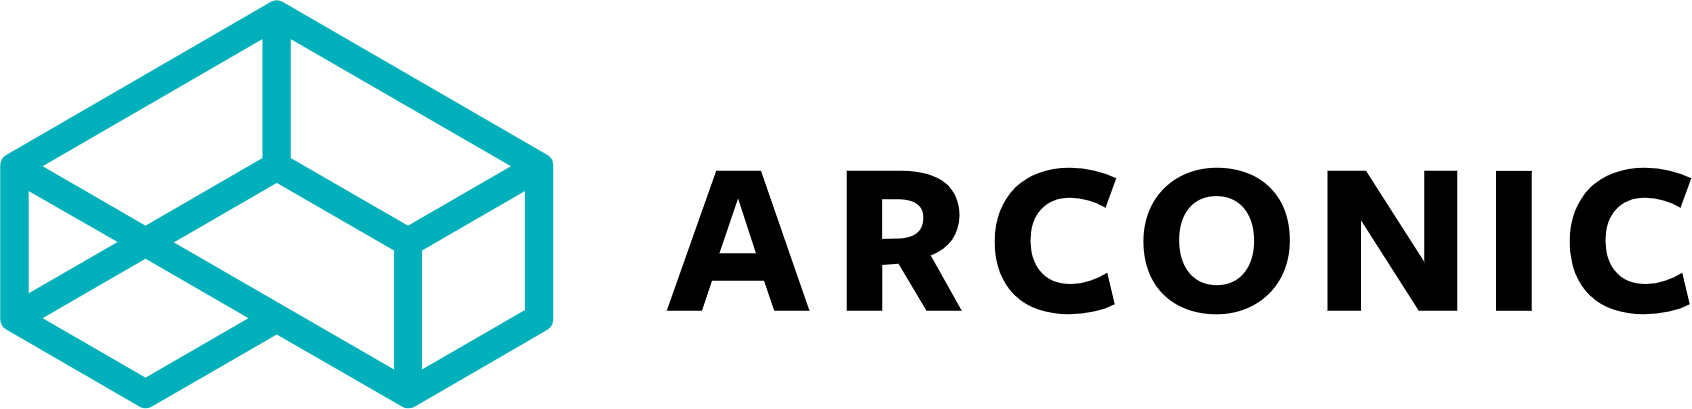 Arconic logo large (transparent PNG)